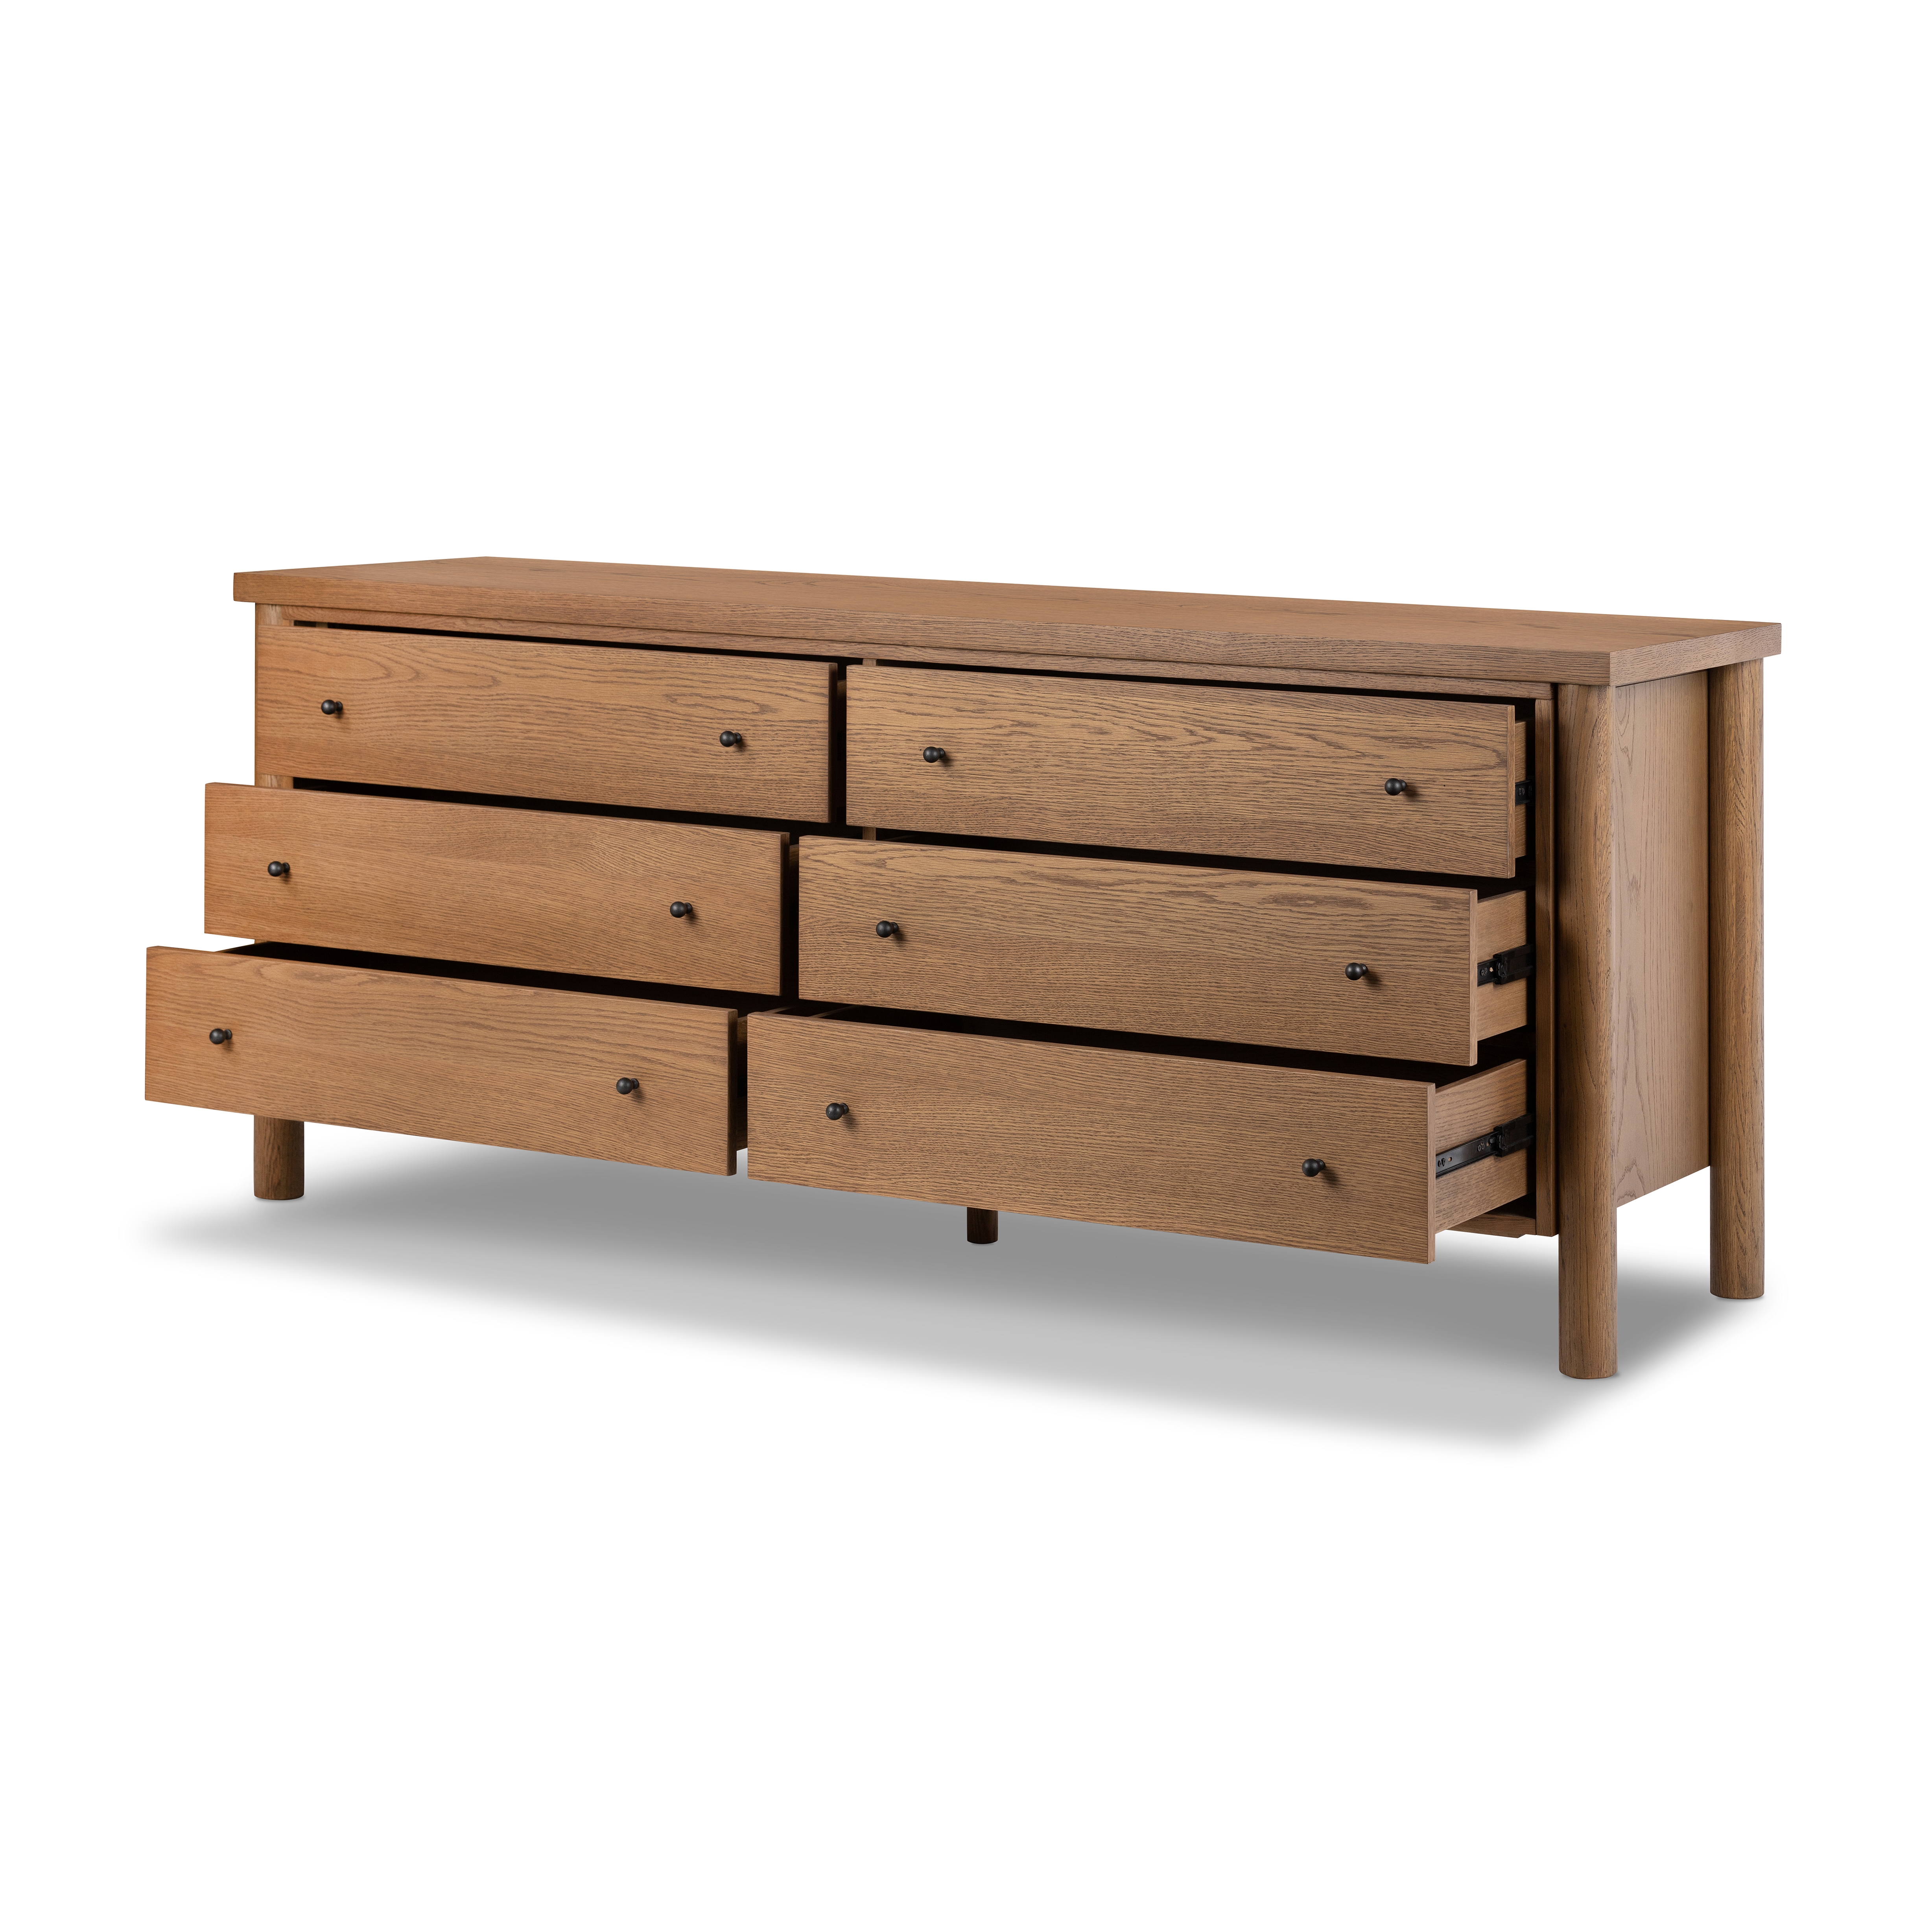 Roark 6 Drawer Dresser-Amber Oak Veneer - Image 4